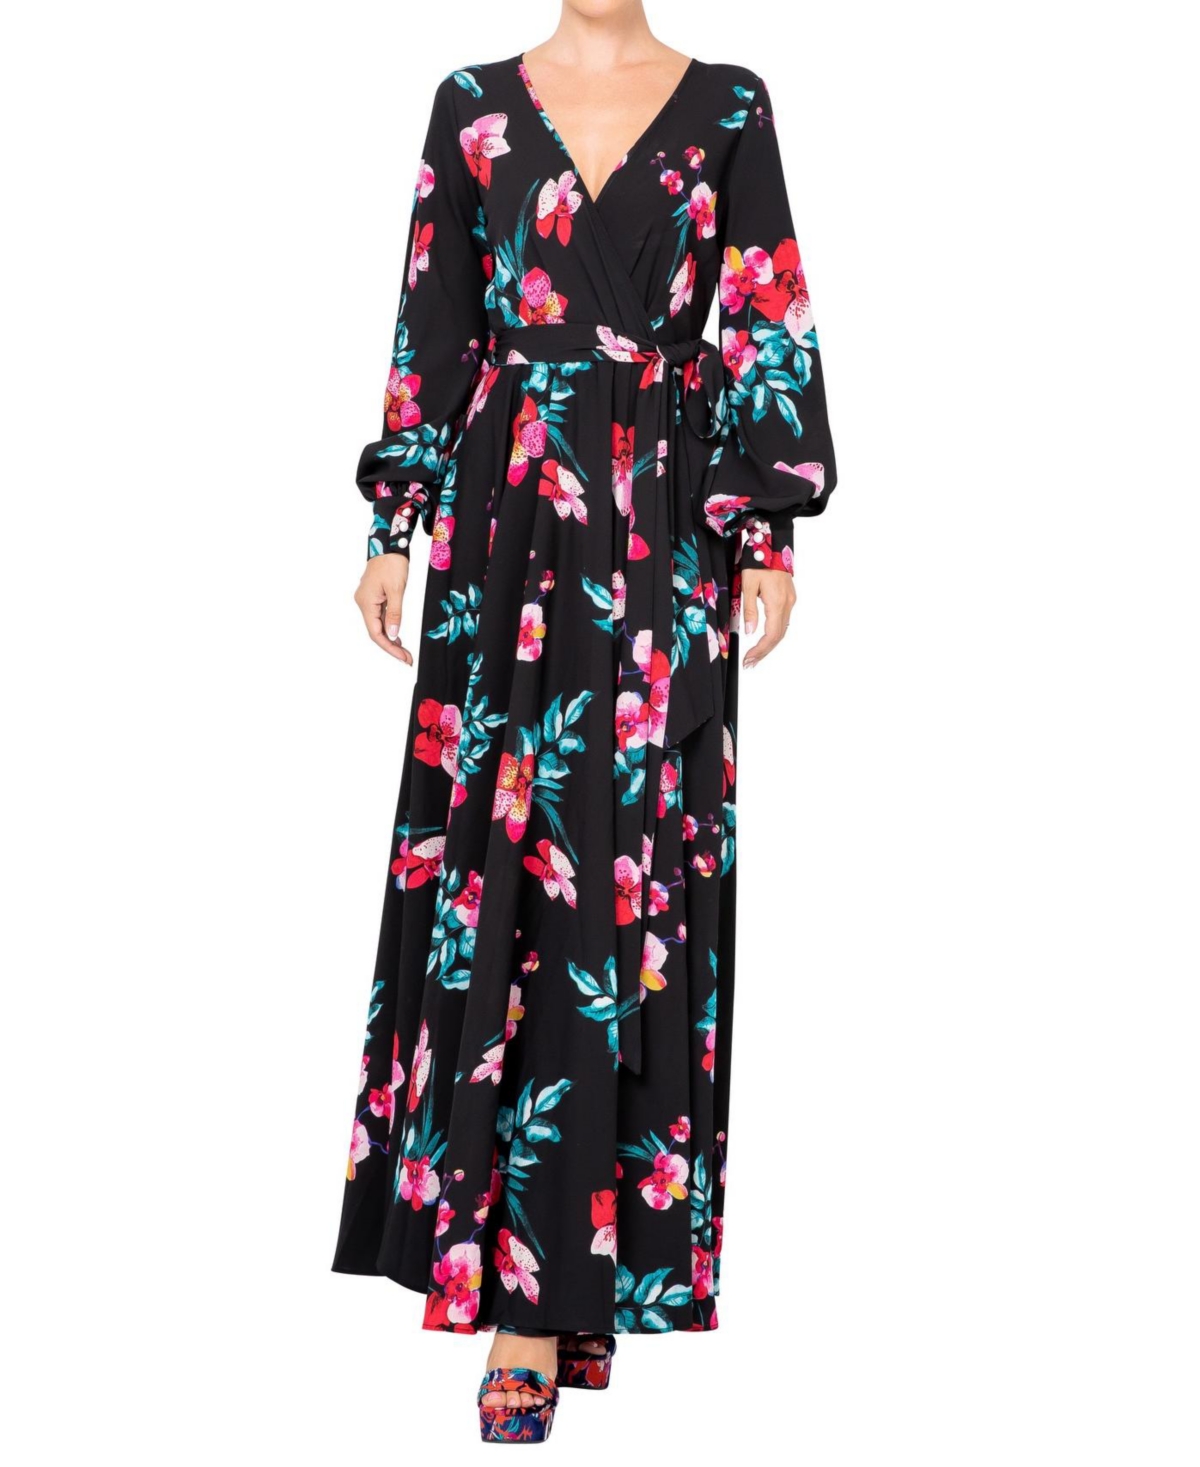 Plus Size LilyPad Maxi Dress - Orchid black